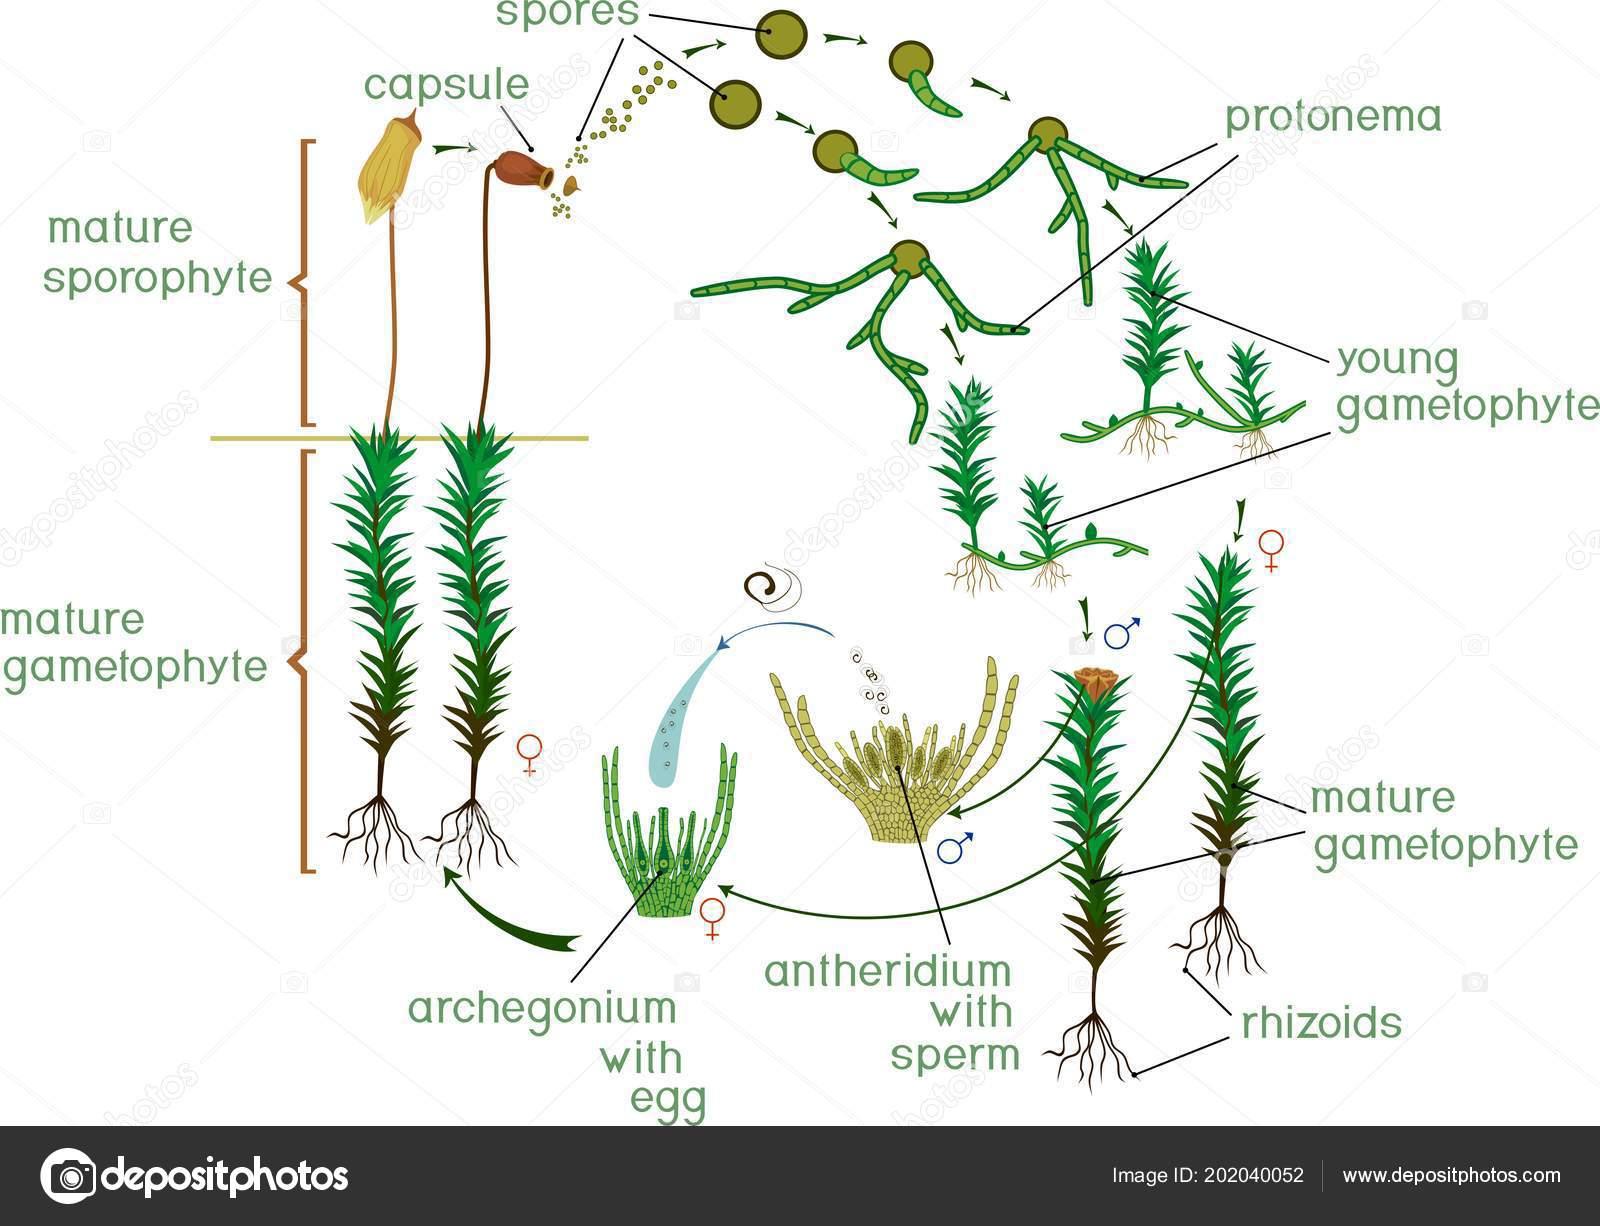 depositphotos_202040052-stock-illustration-moss-life-cycle-diagram-life.jpg